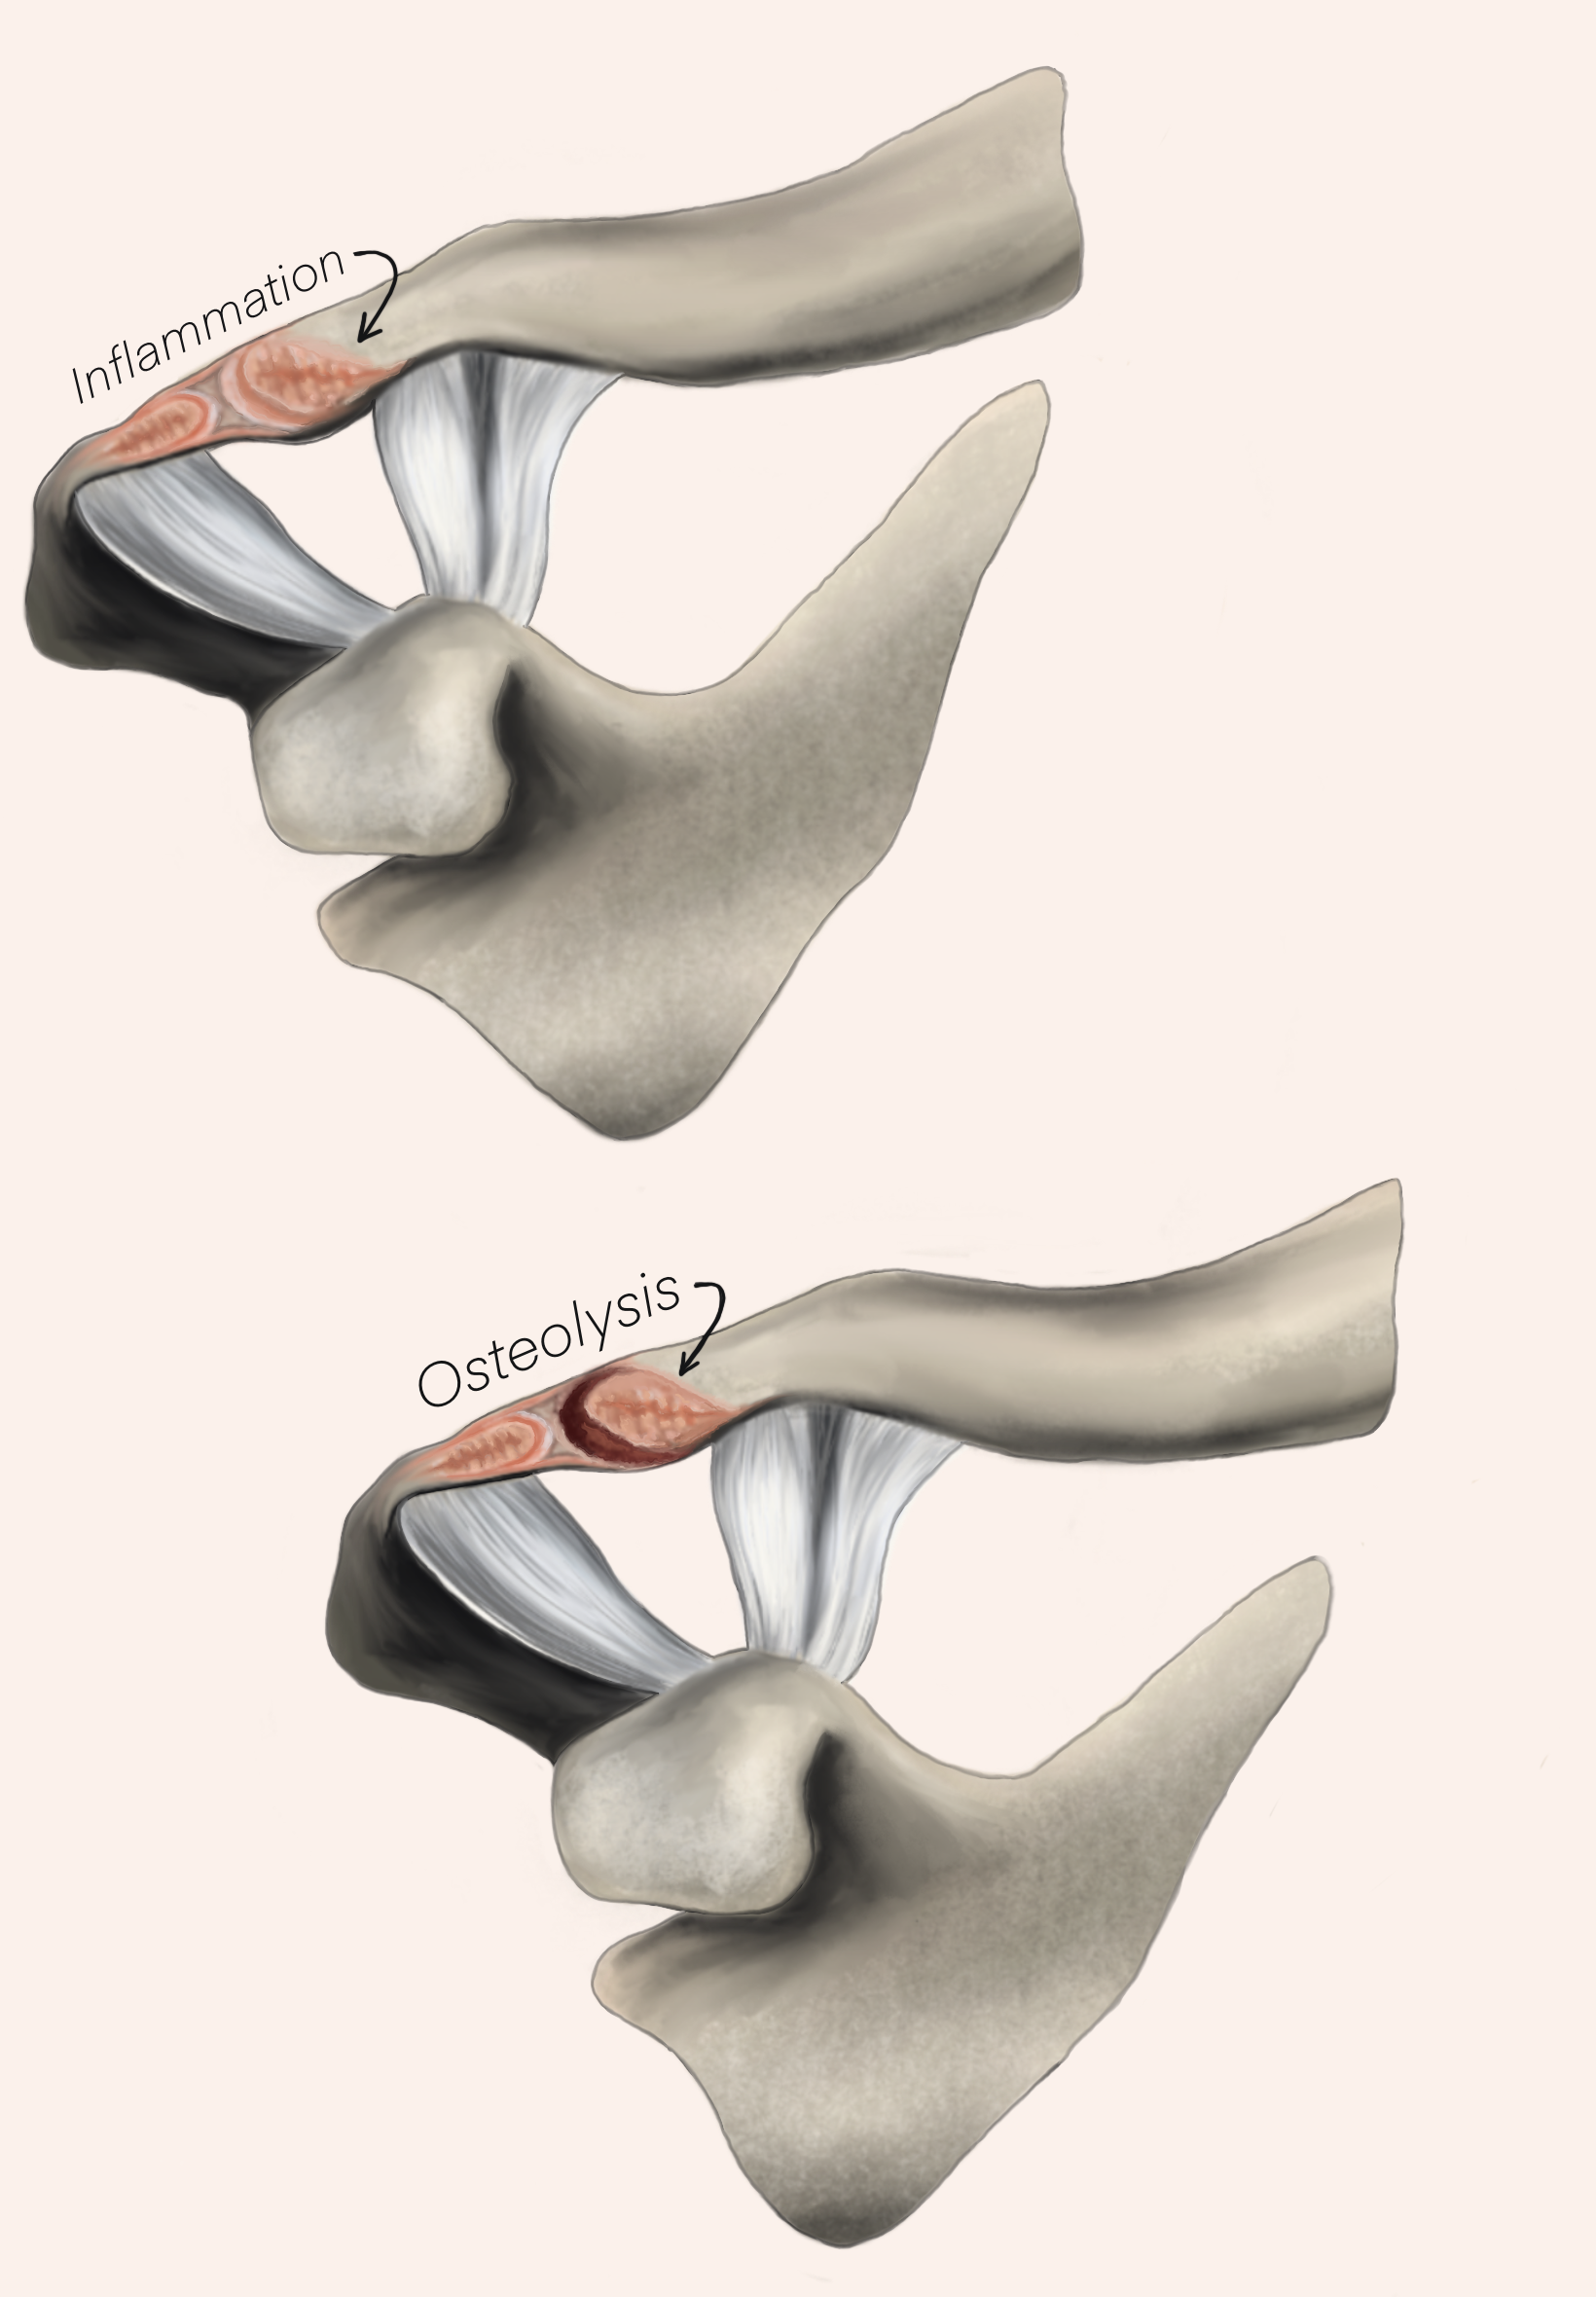 Illustration of Distal Clavicular Osteolysis